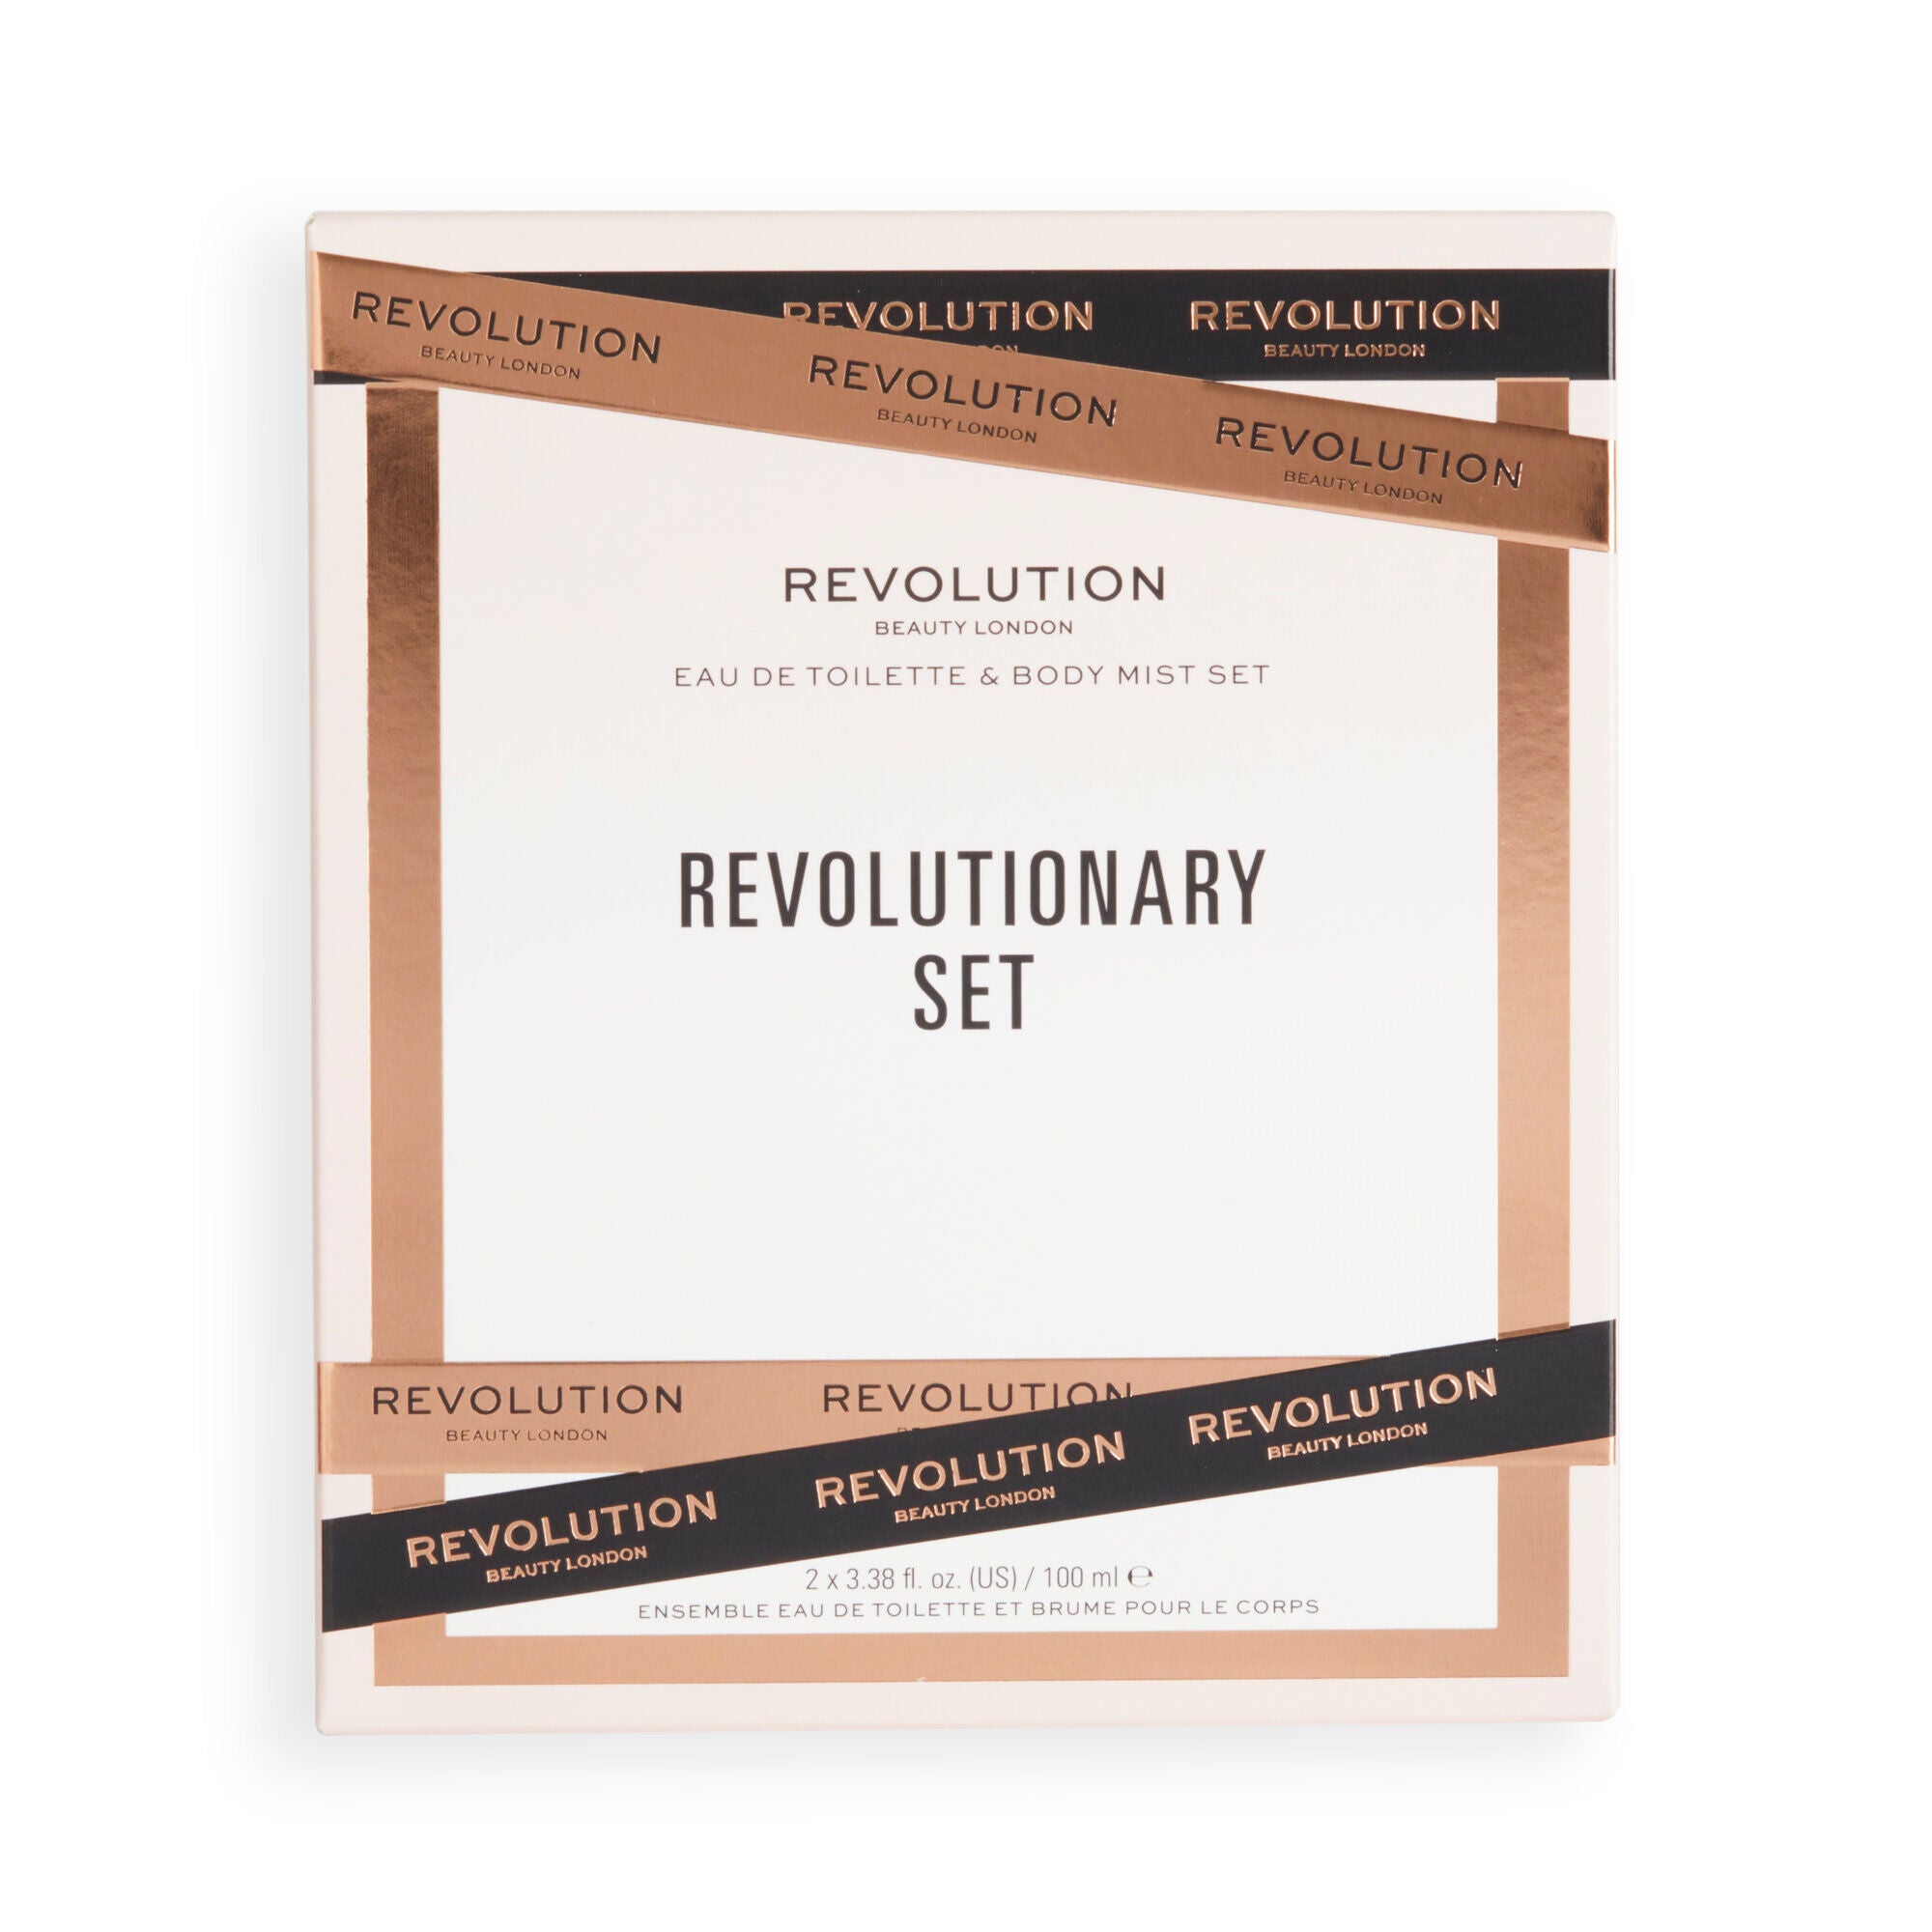 Makeup Revolution Revolutionary Set Eau De Toilette & Body Mist Gift Set, packaging